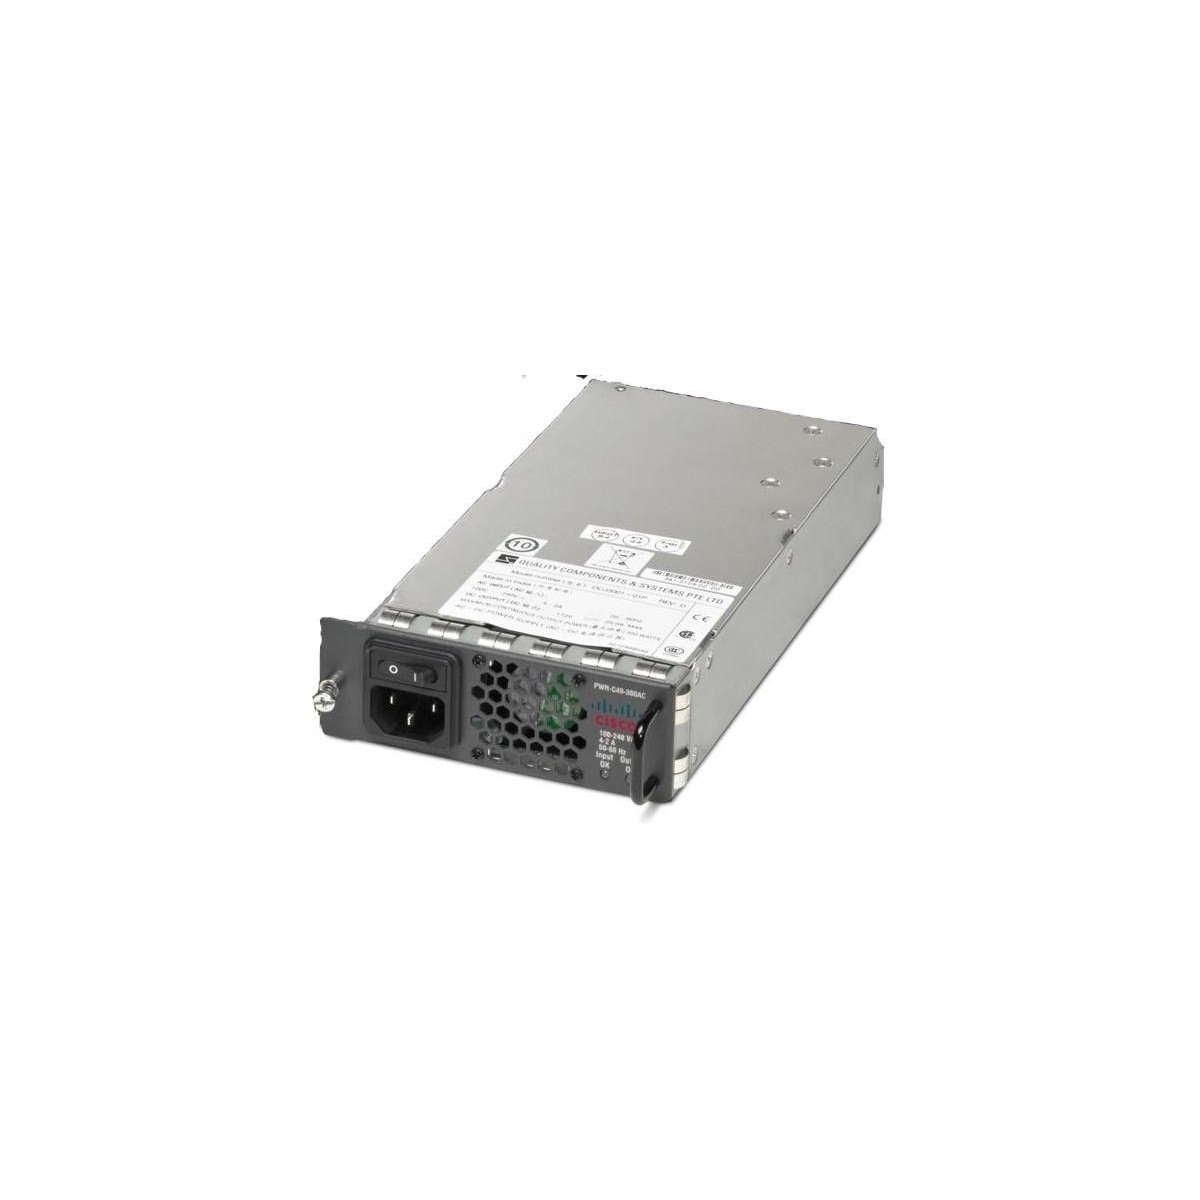 Cisco PWR-C49-300AC/2 - Power supply - Black,Silver - Cisco Catalyst 4948 - 300 W - 100 - 240 V - 50 - 60 Hz